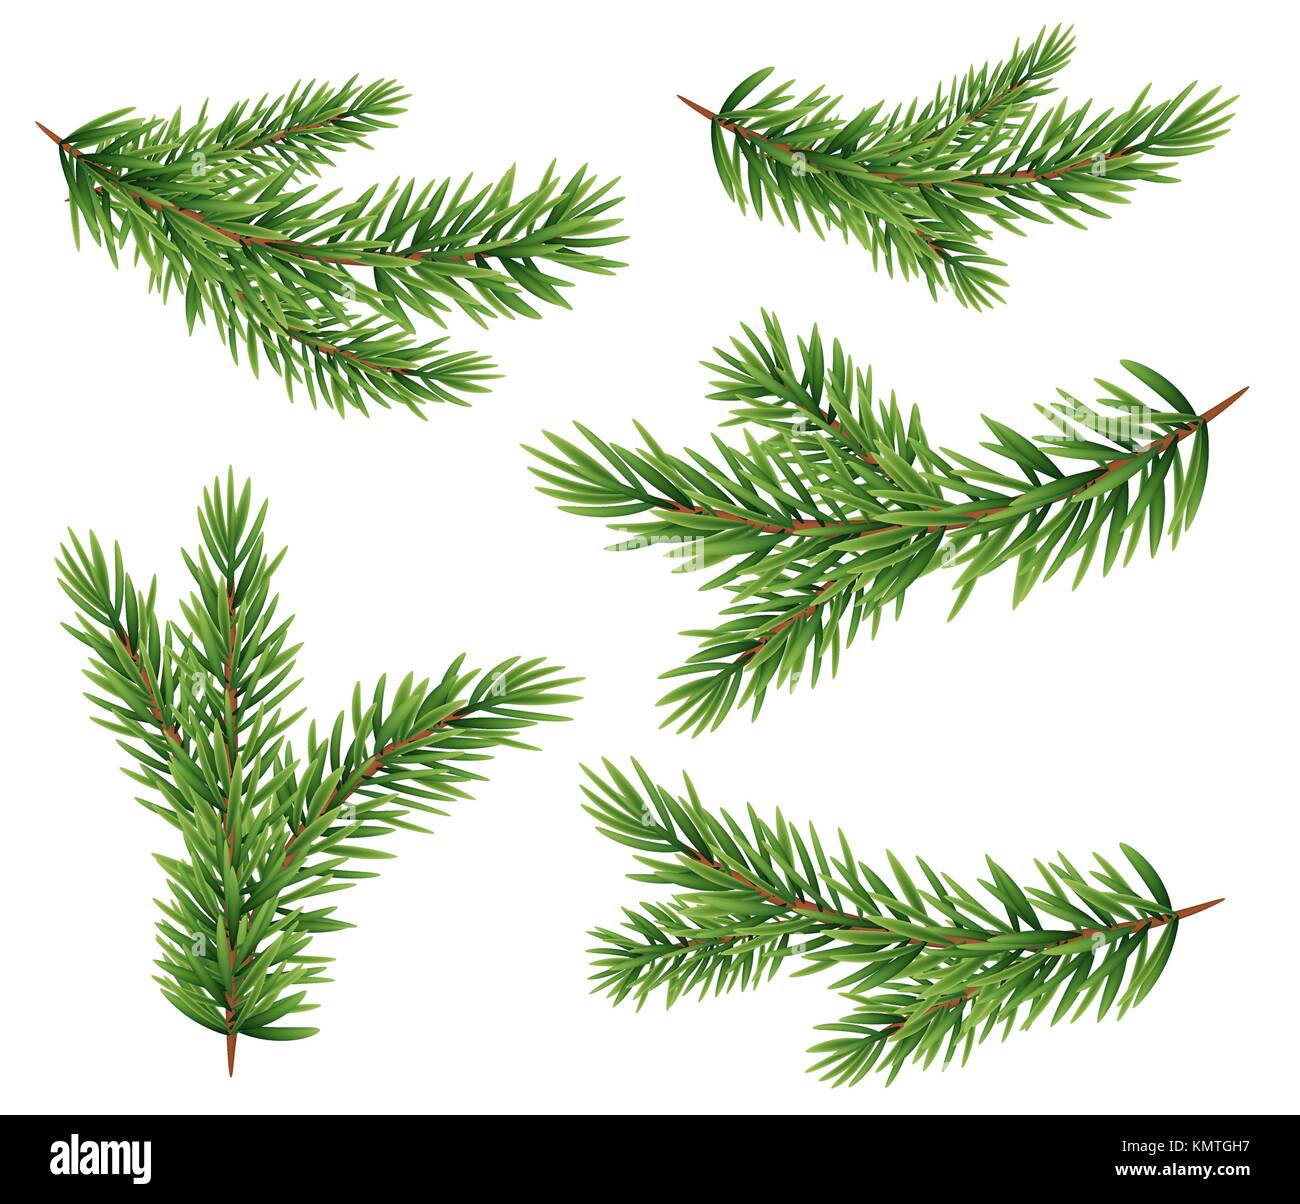 Insieme di raccolta di realistica rami d abete silhouette per albero di natale, pino. illustrazione vettoriale Illustrazione Vettoriale